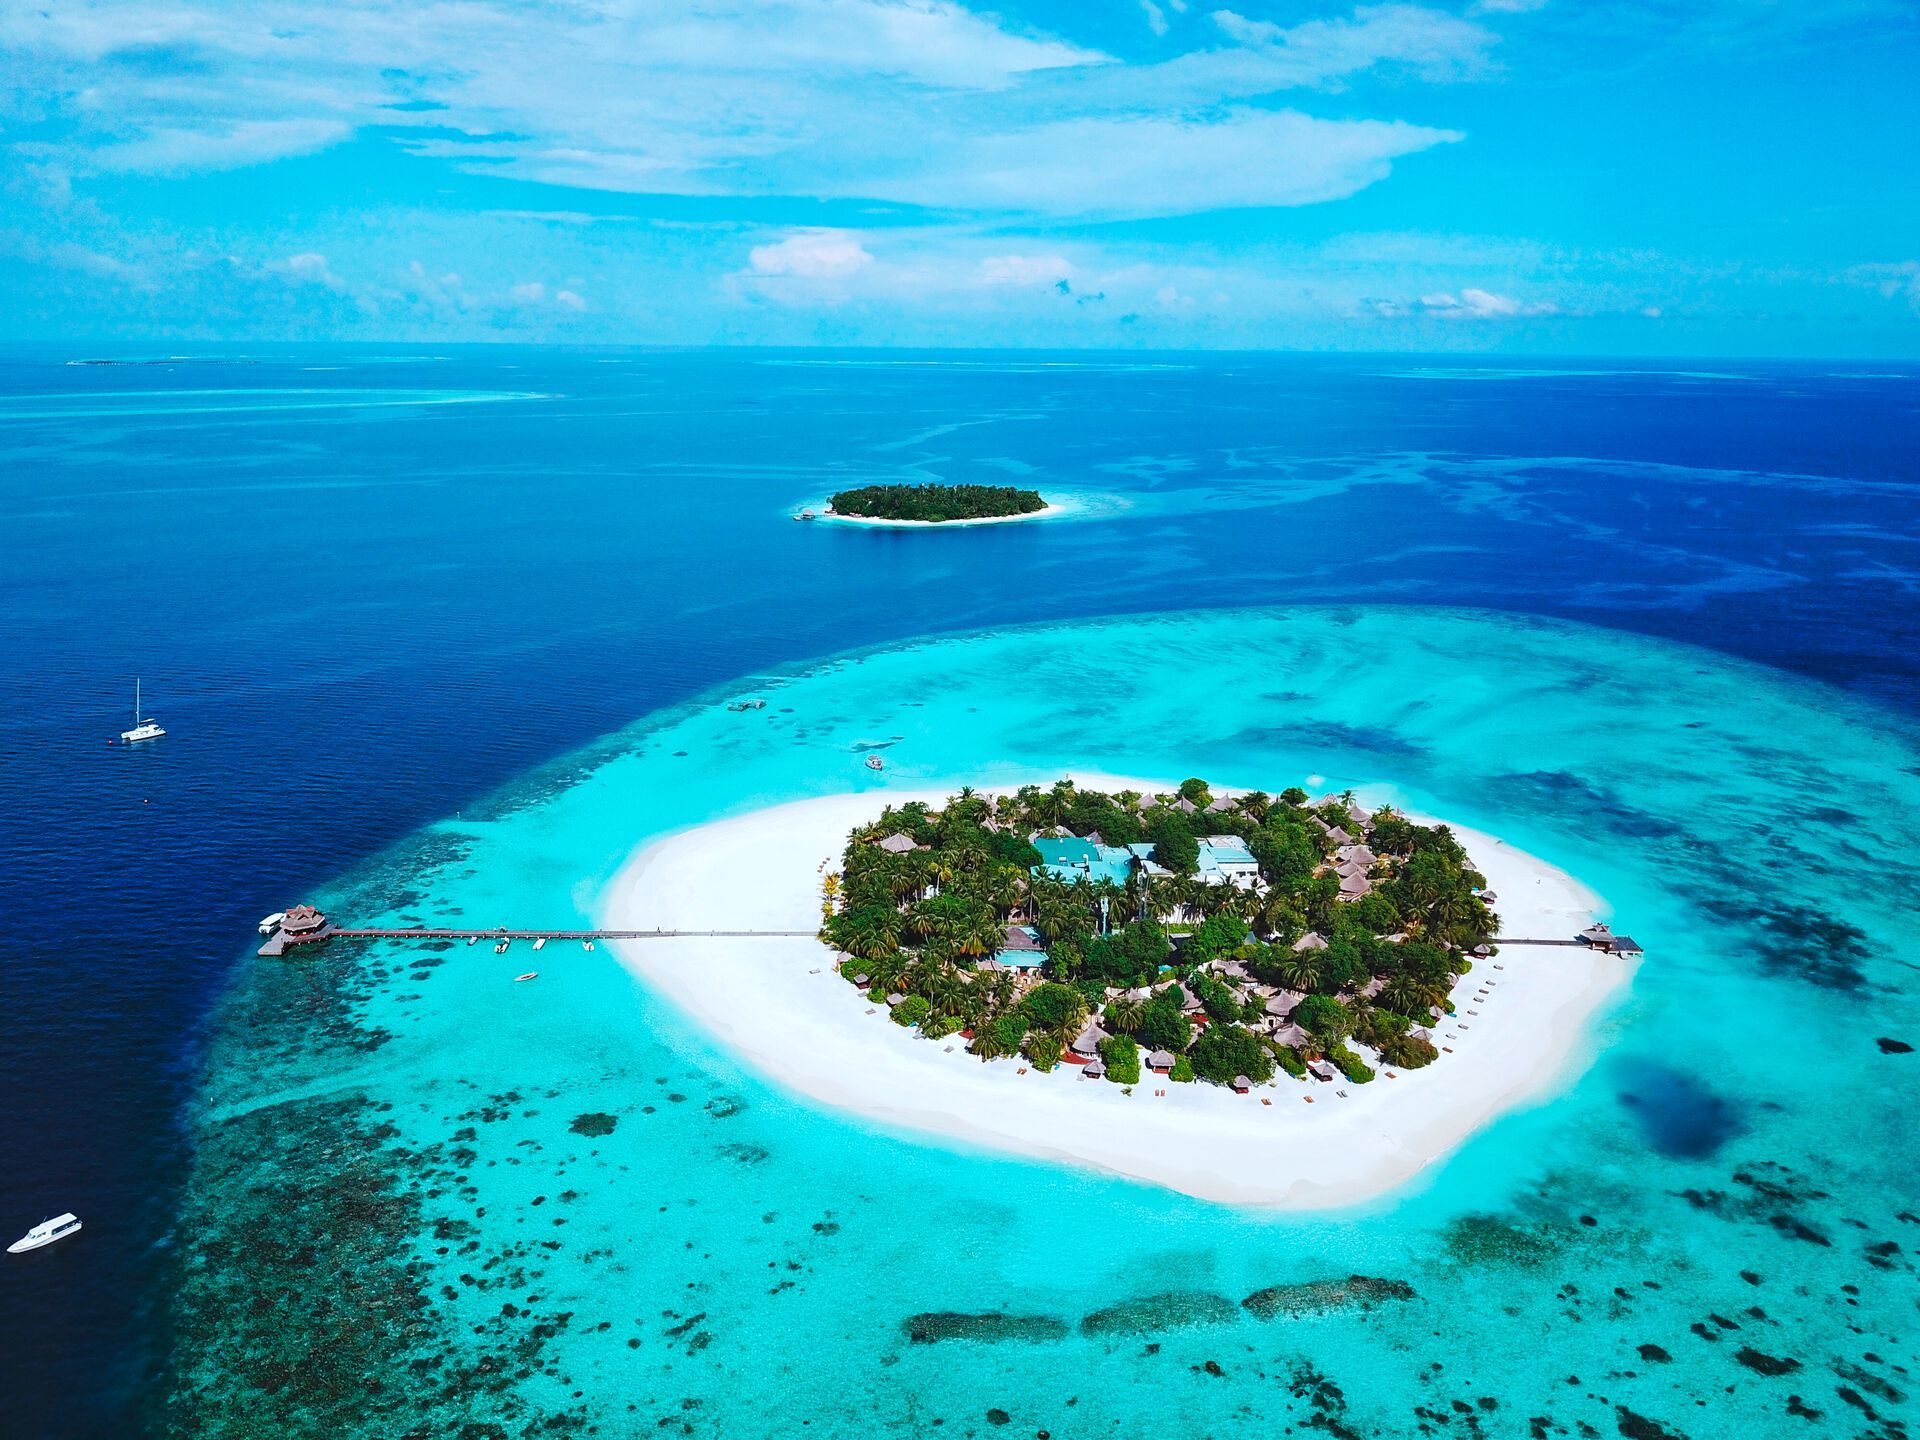 Maldives - Hotel Banyan Tree Vabbinfaru 5* - transfert inclus